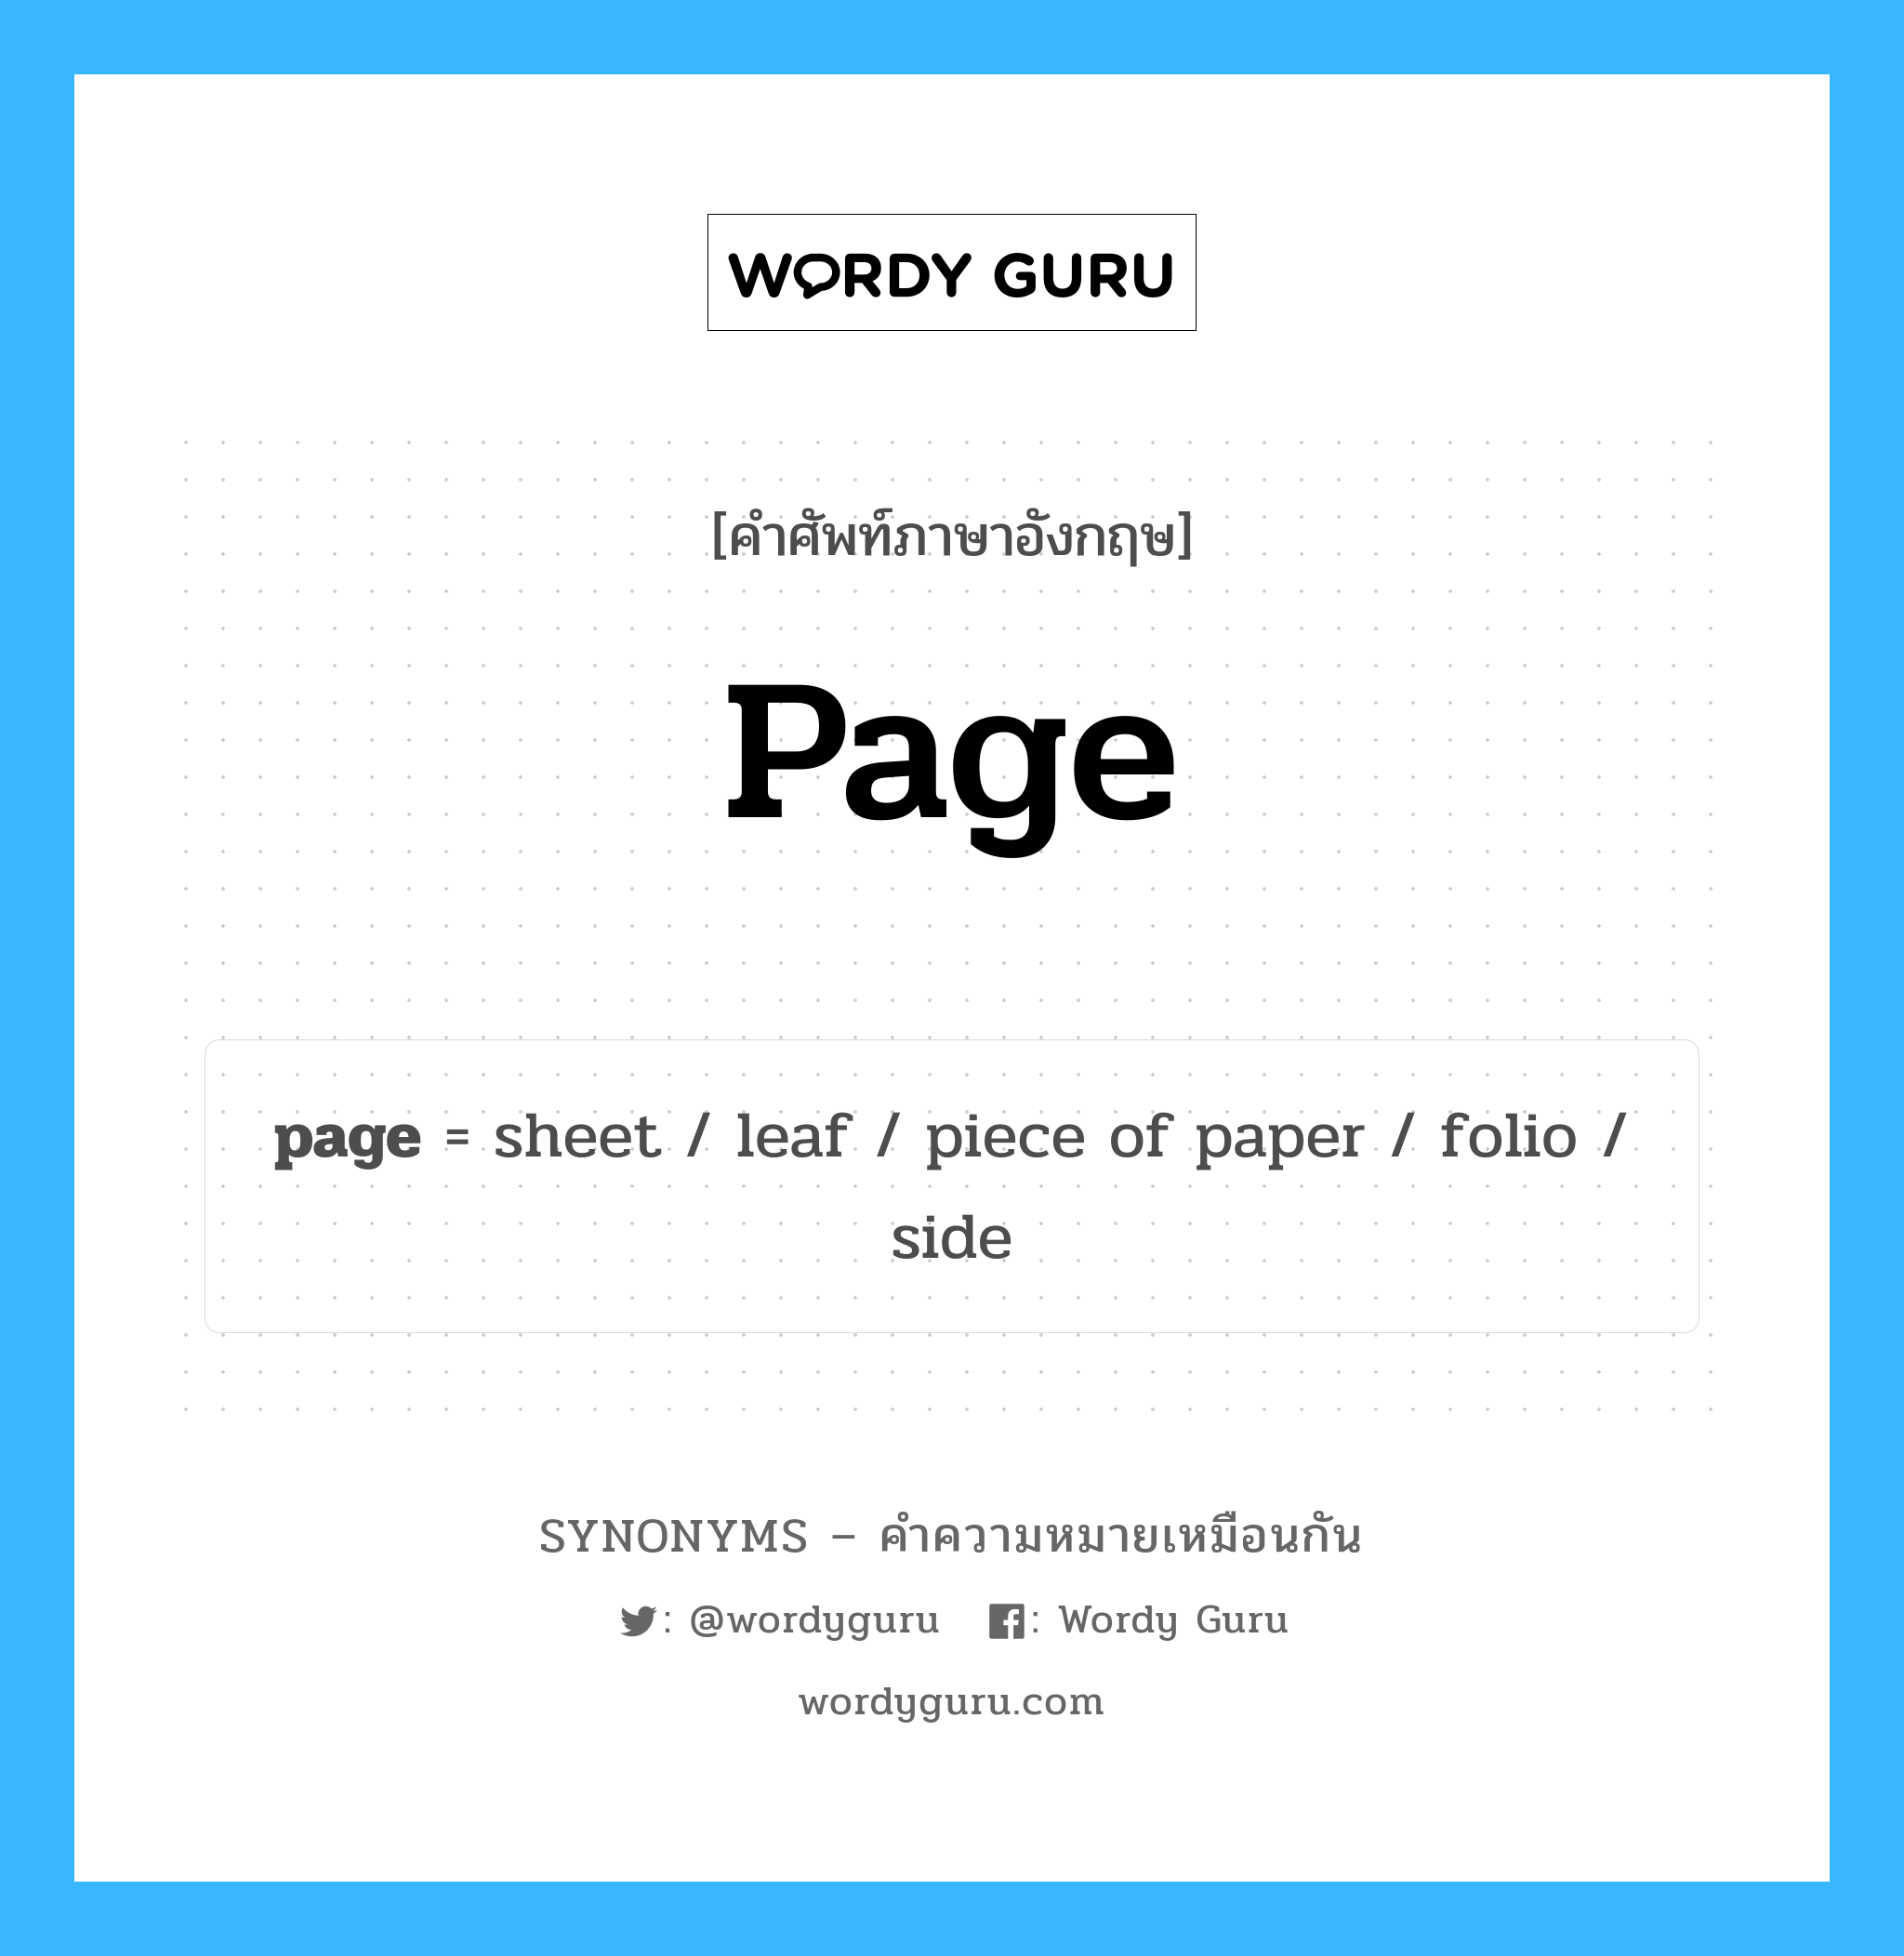 leaf เป็นหนึ่งใน page และมีคำอื่น ๆ อีกดังนี้, คำศัพท์ภาษาอังกฤษ leaf ความหมายคล้ายกันกับ page แปลว่า ใบ หมวด page